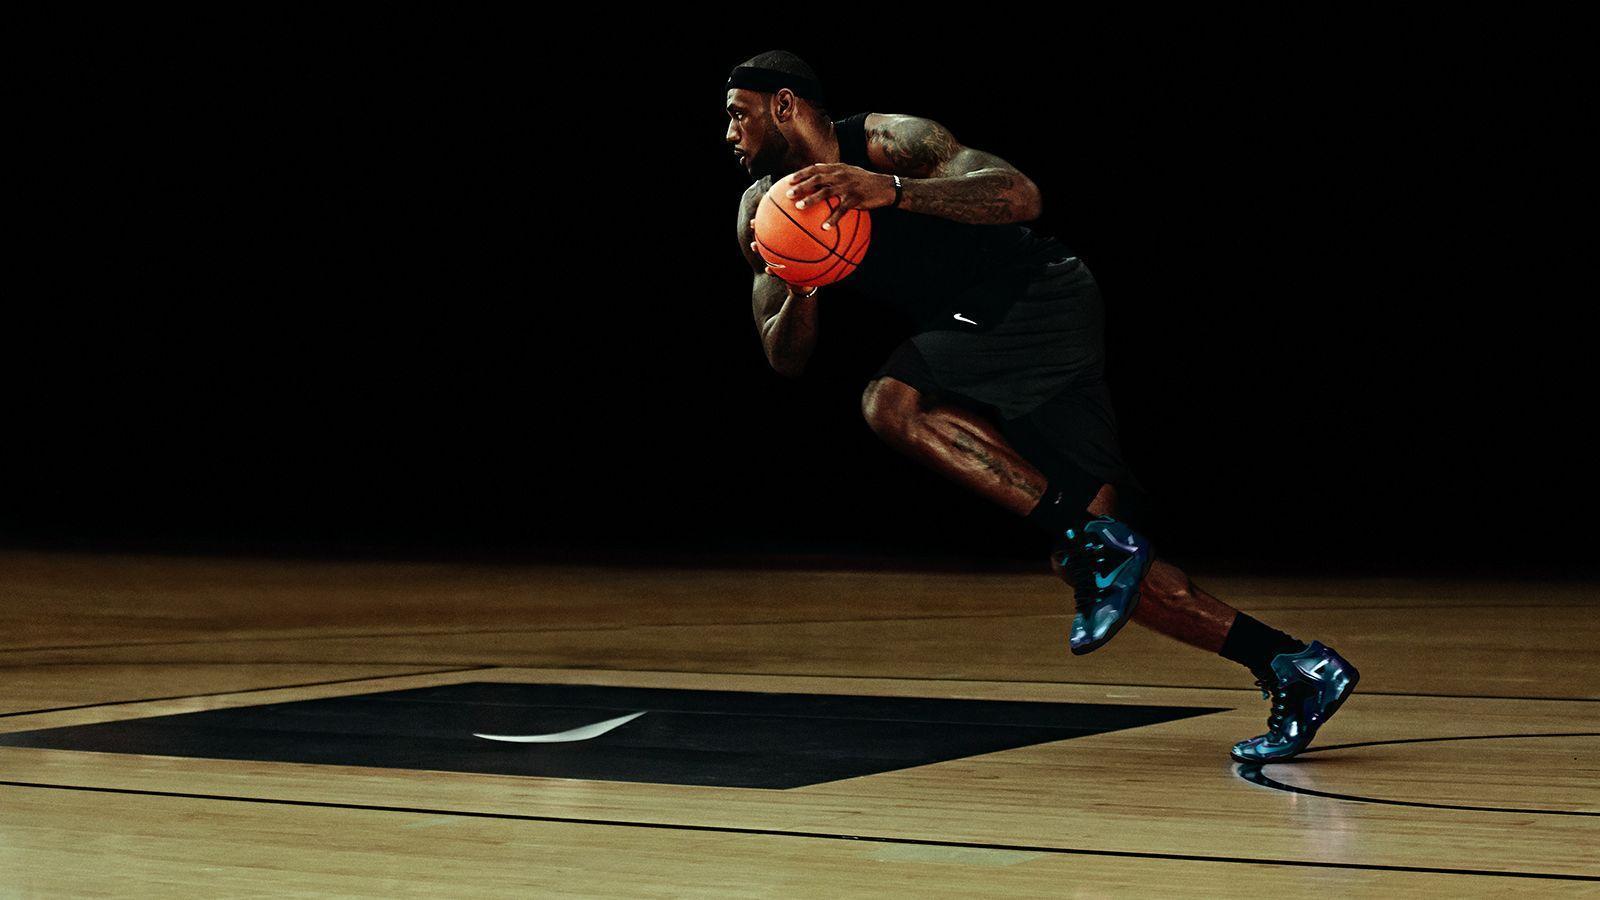 Basketball Nike Shoes Air Wallpaper Image Wallpaper